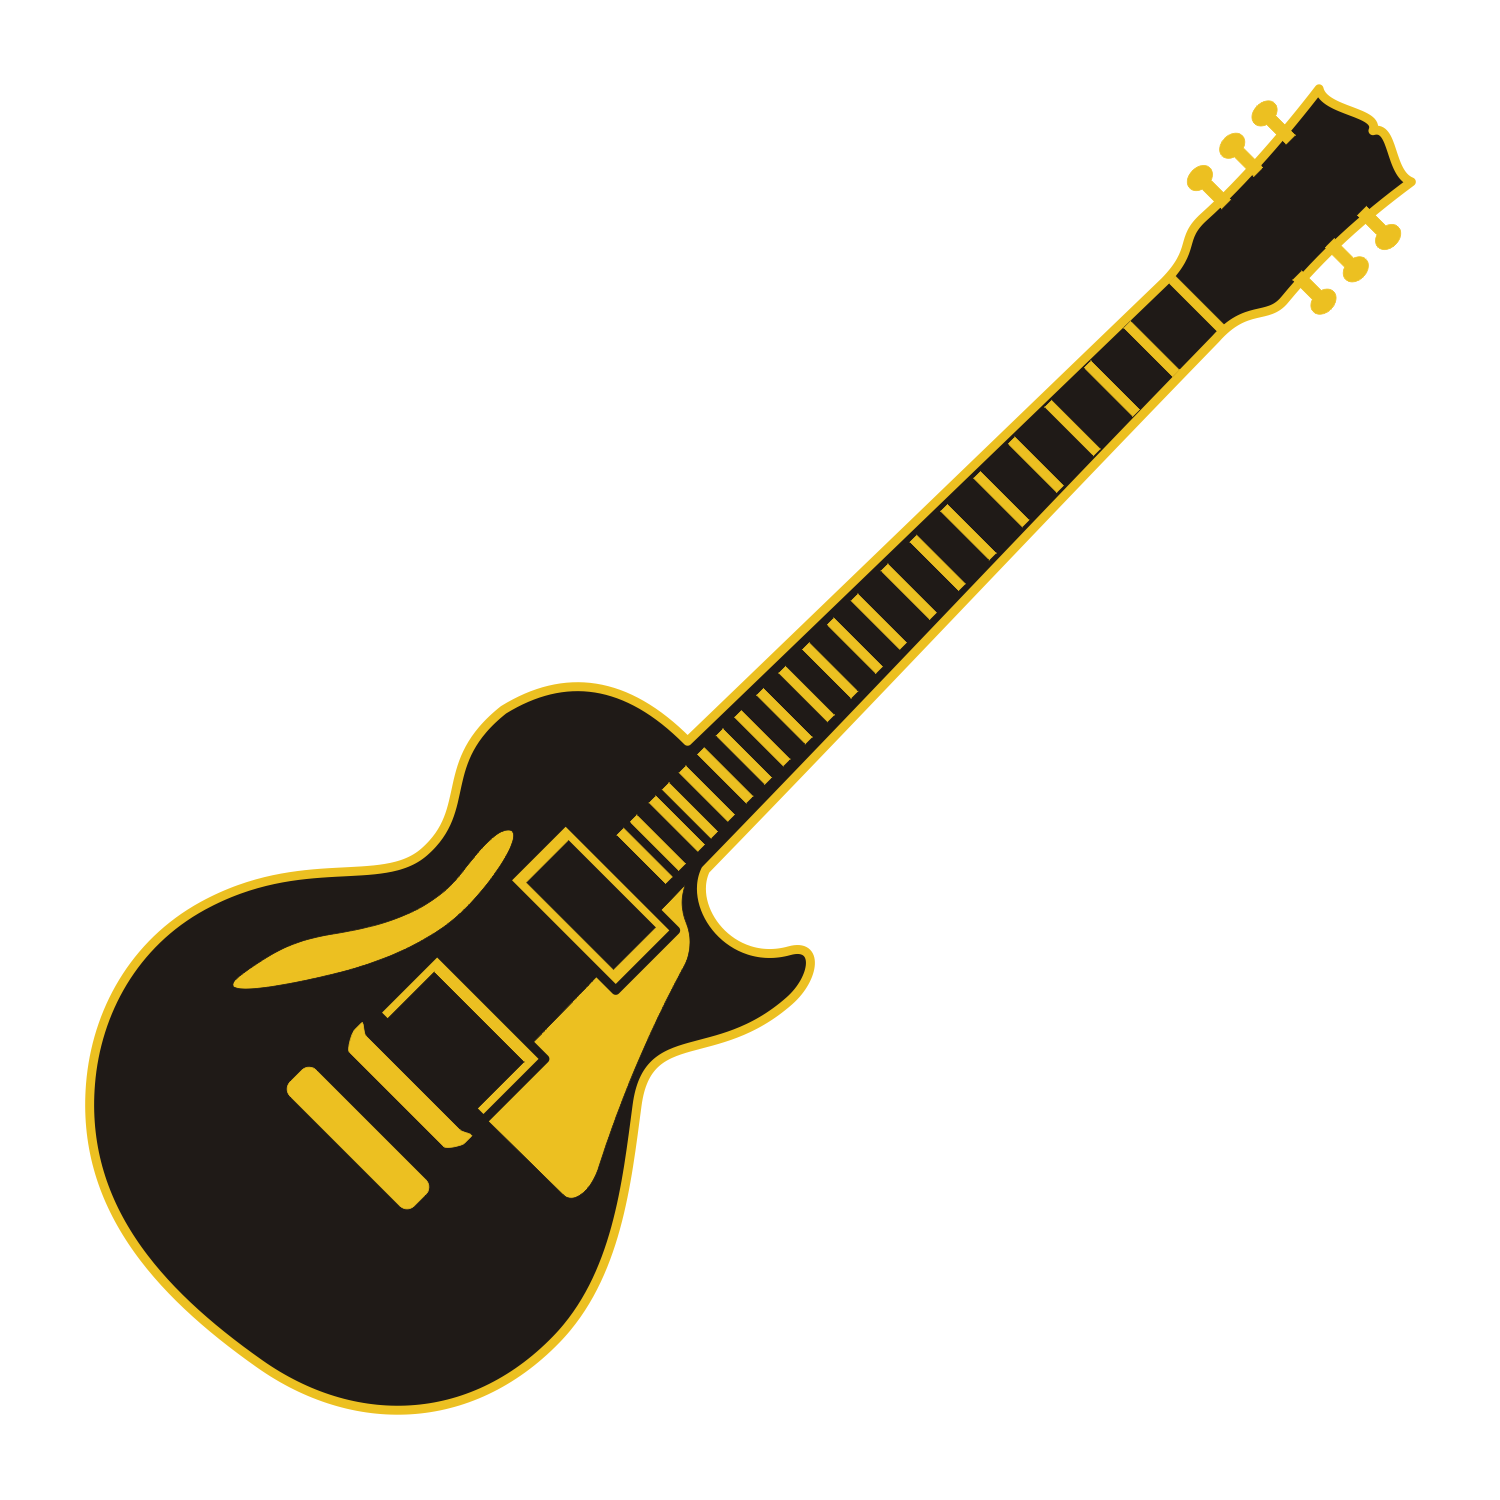 guitar vector clip art free download - photo #35